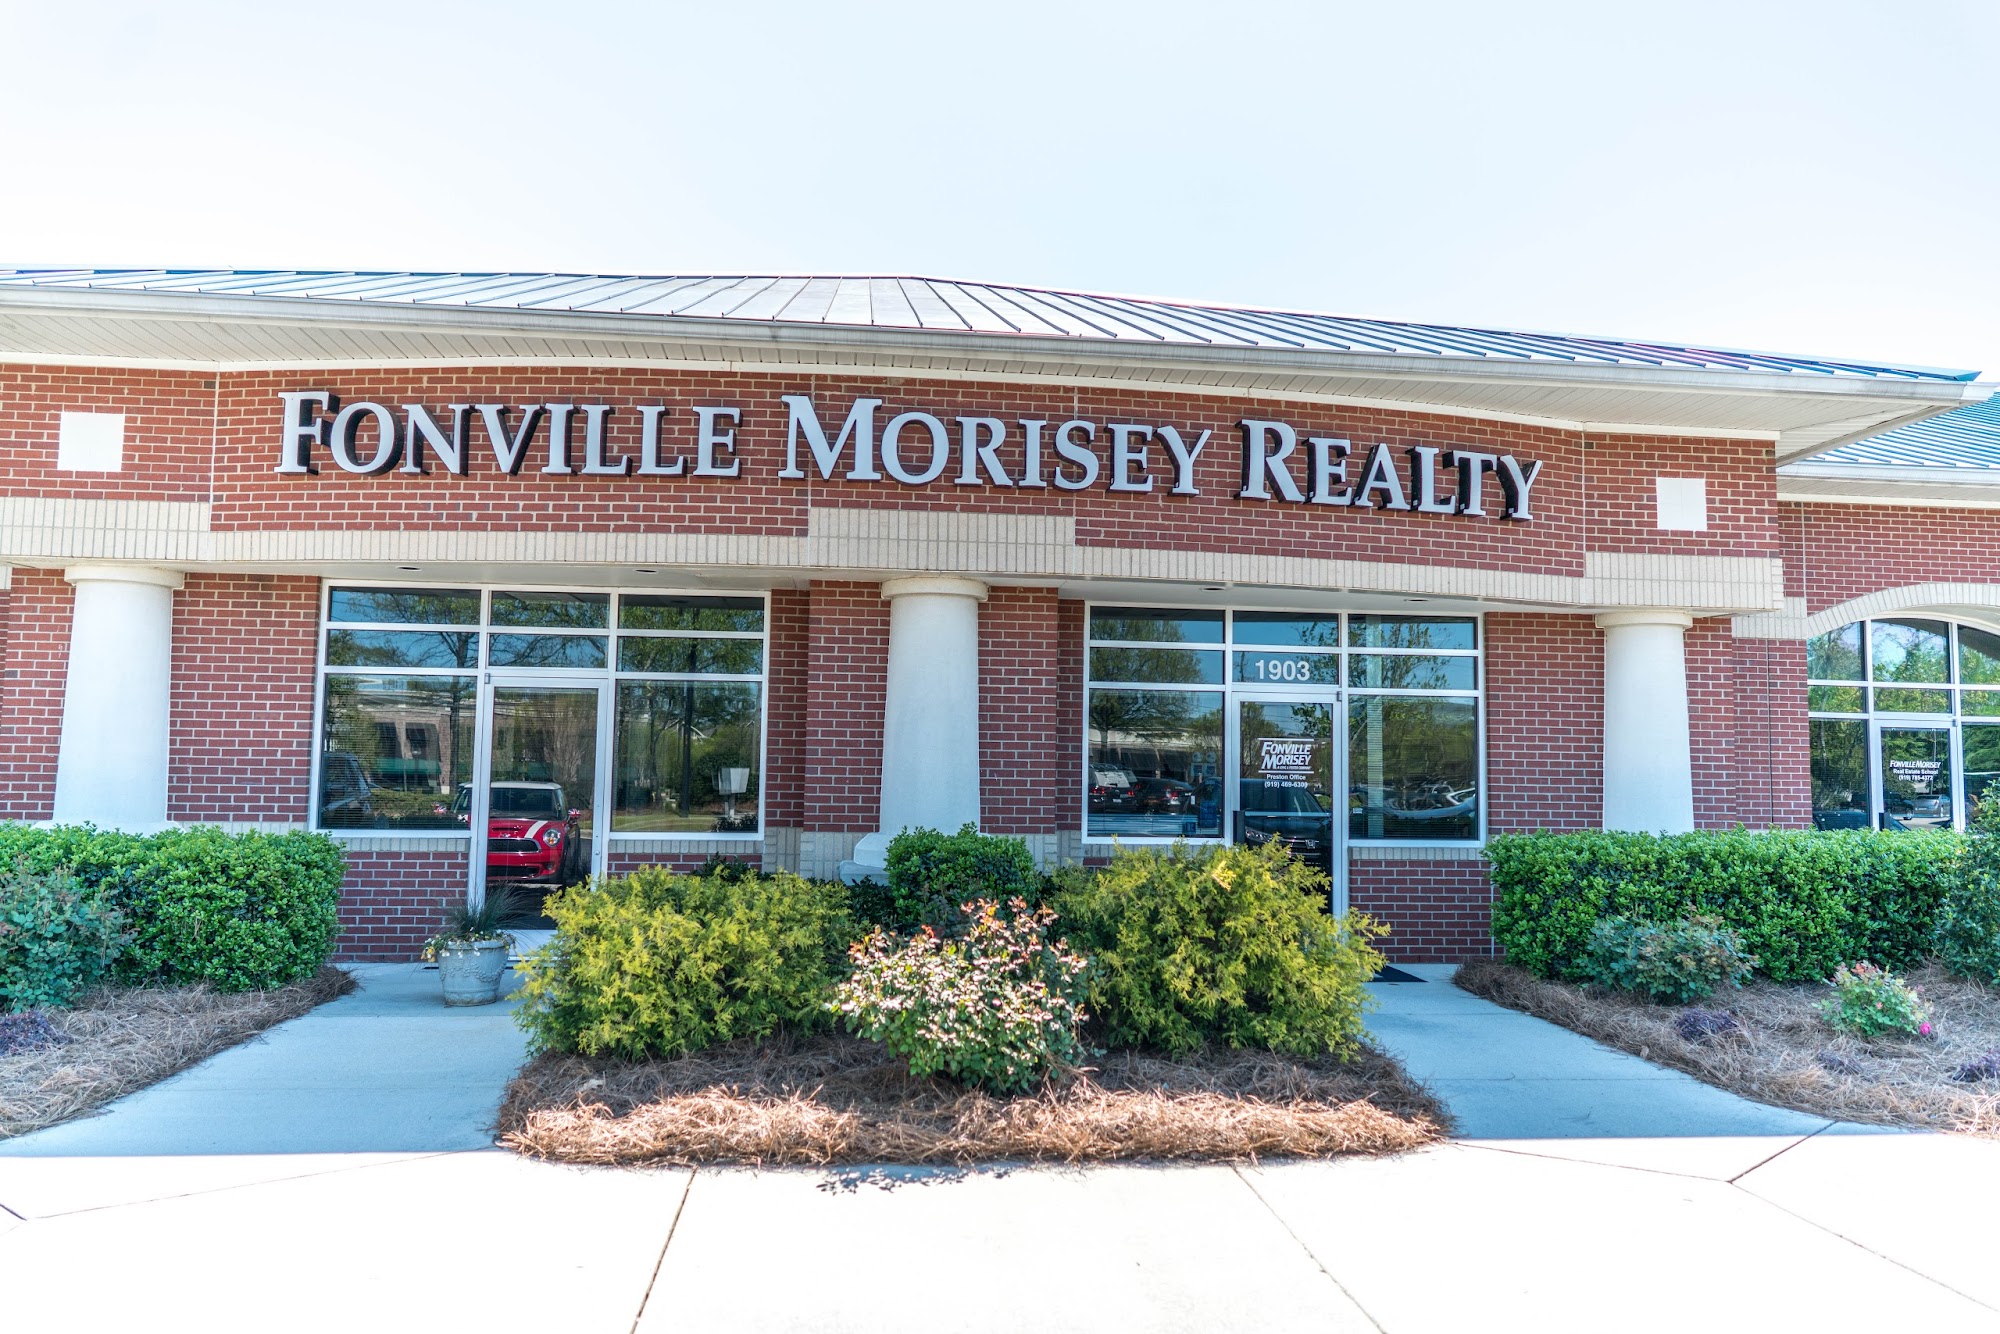 Fonville Morisey Preston Cary, NC - Realty